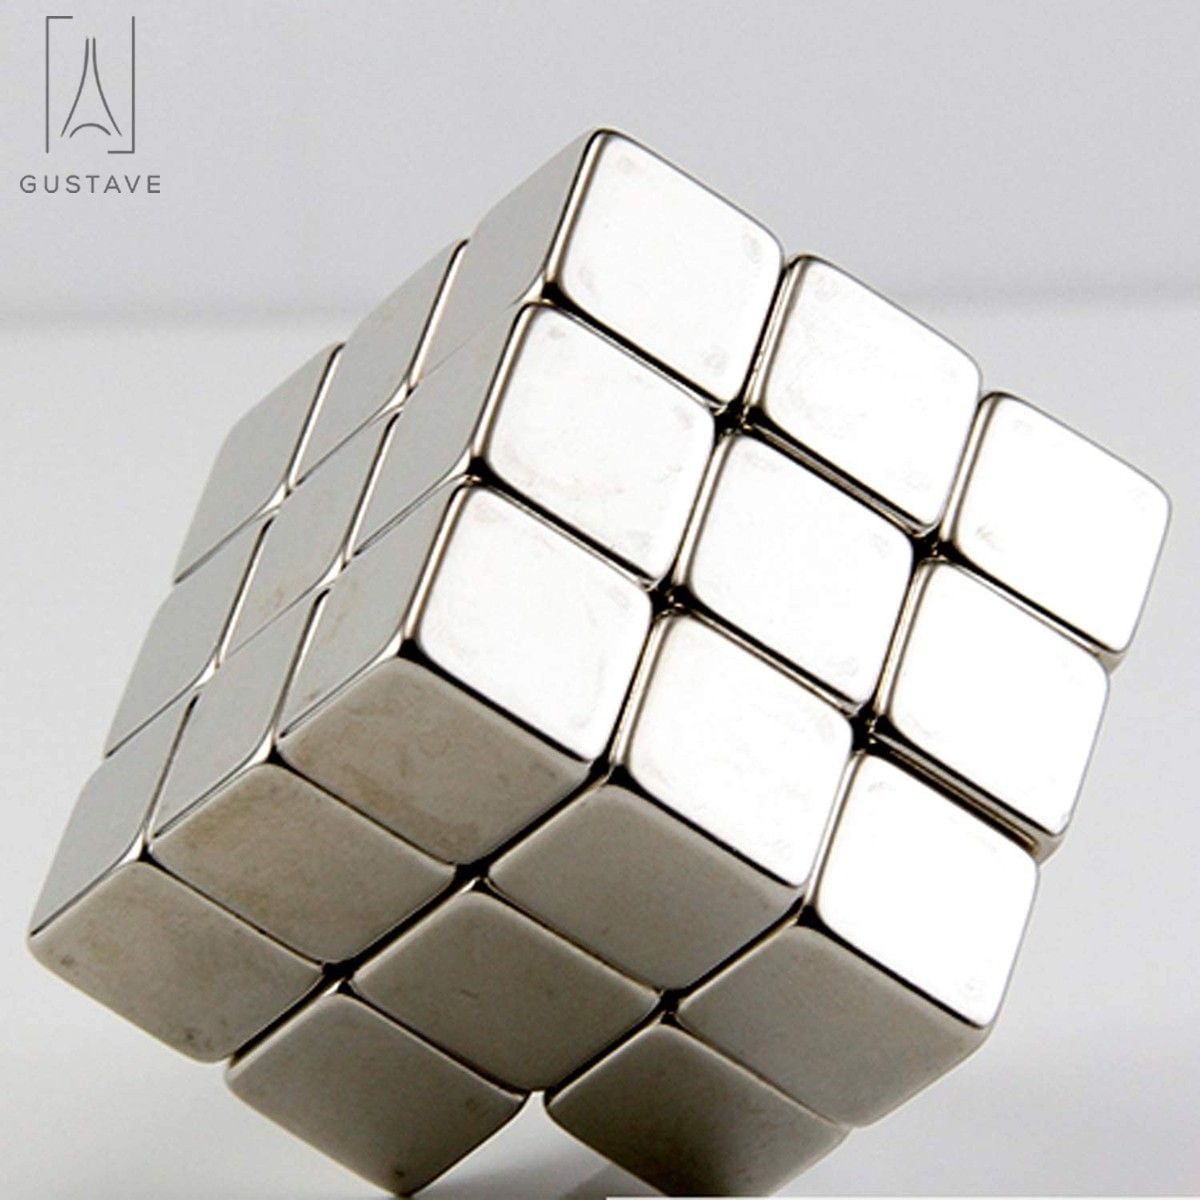 2 Pcs Rare Earth Magnets 10mm x 10mm x 10mm Cube Neodymium Strong Block 